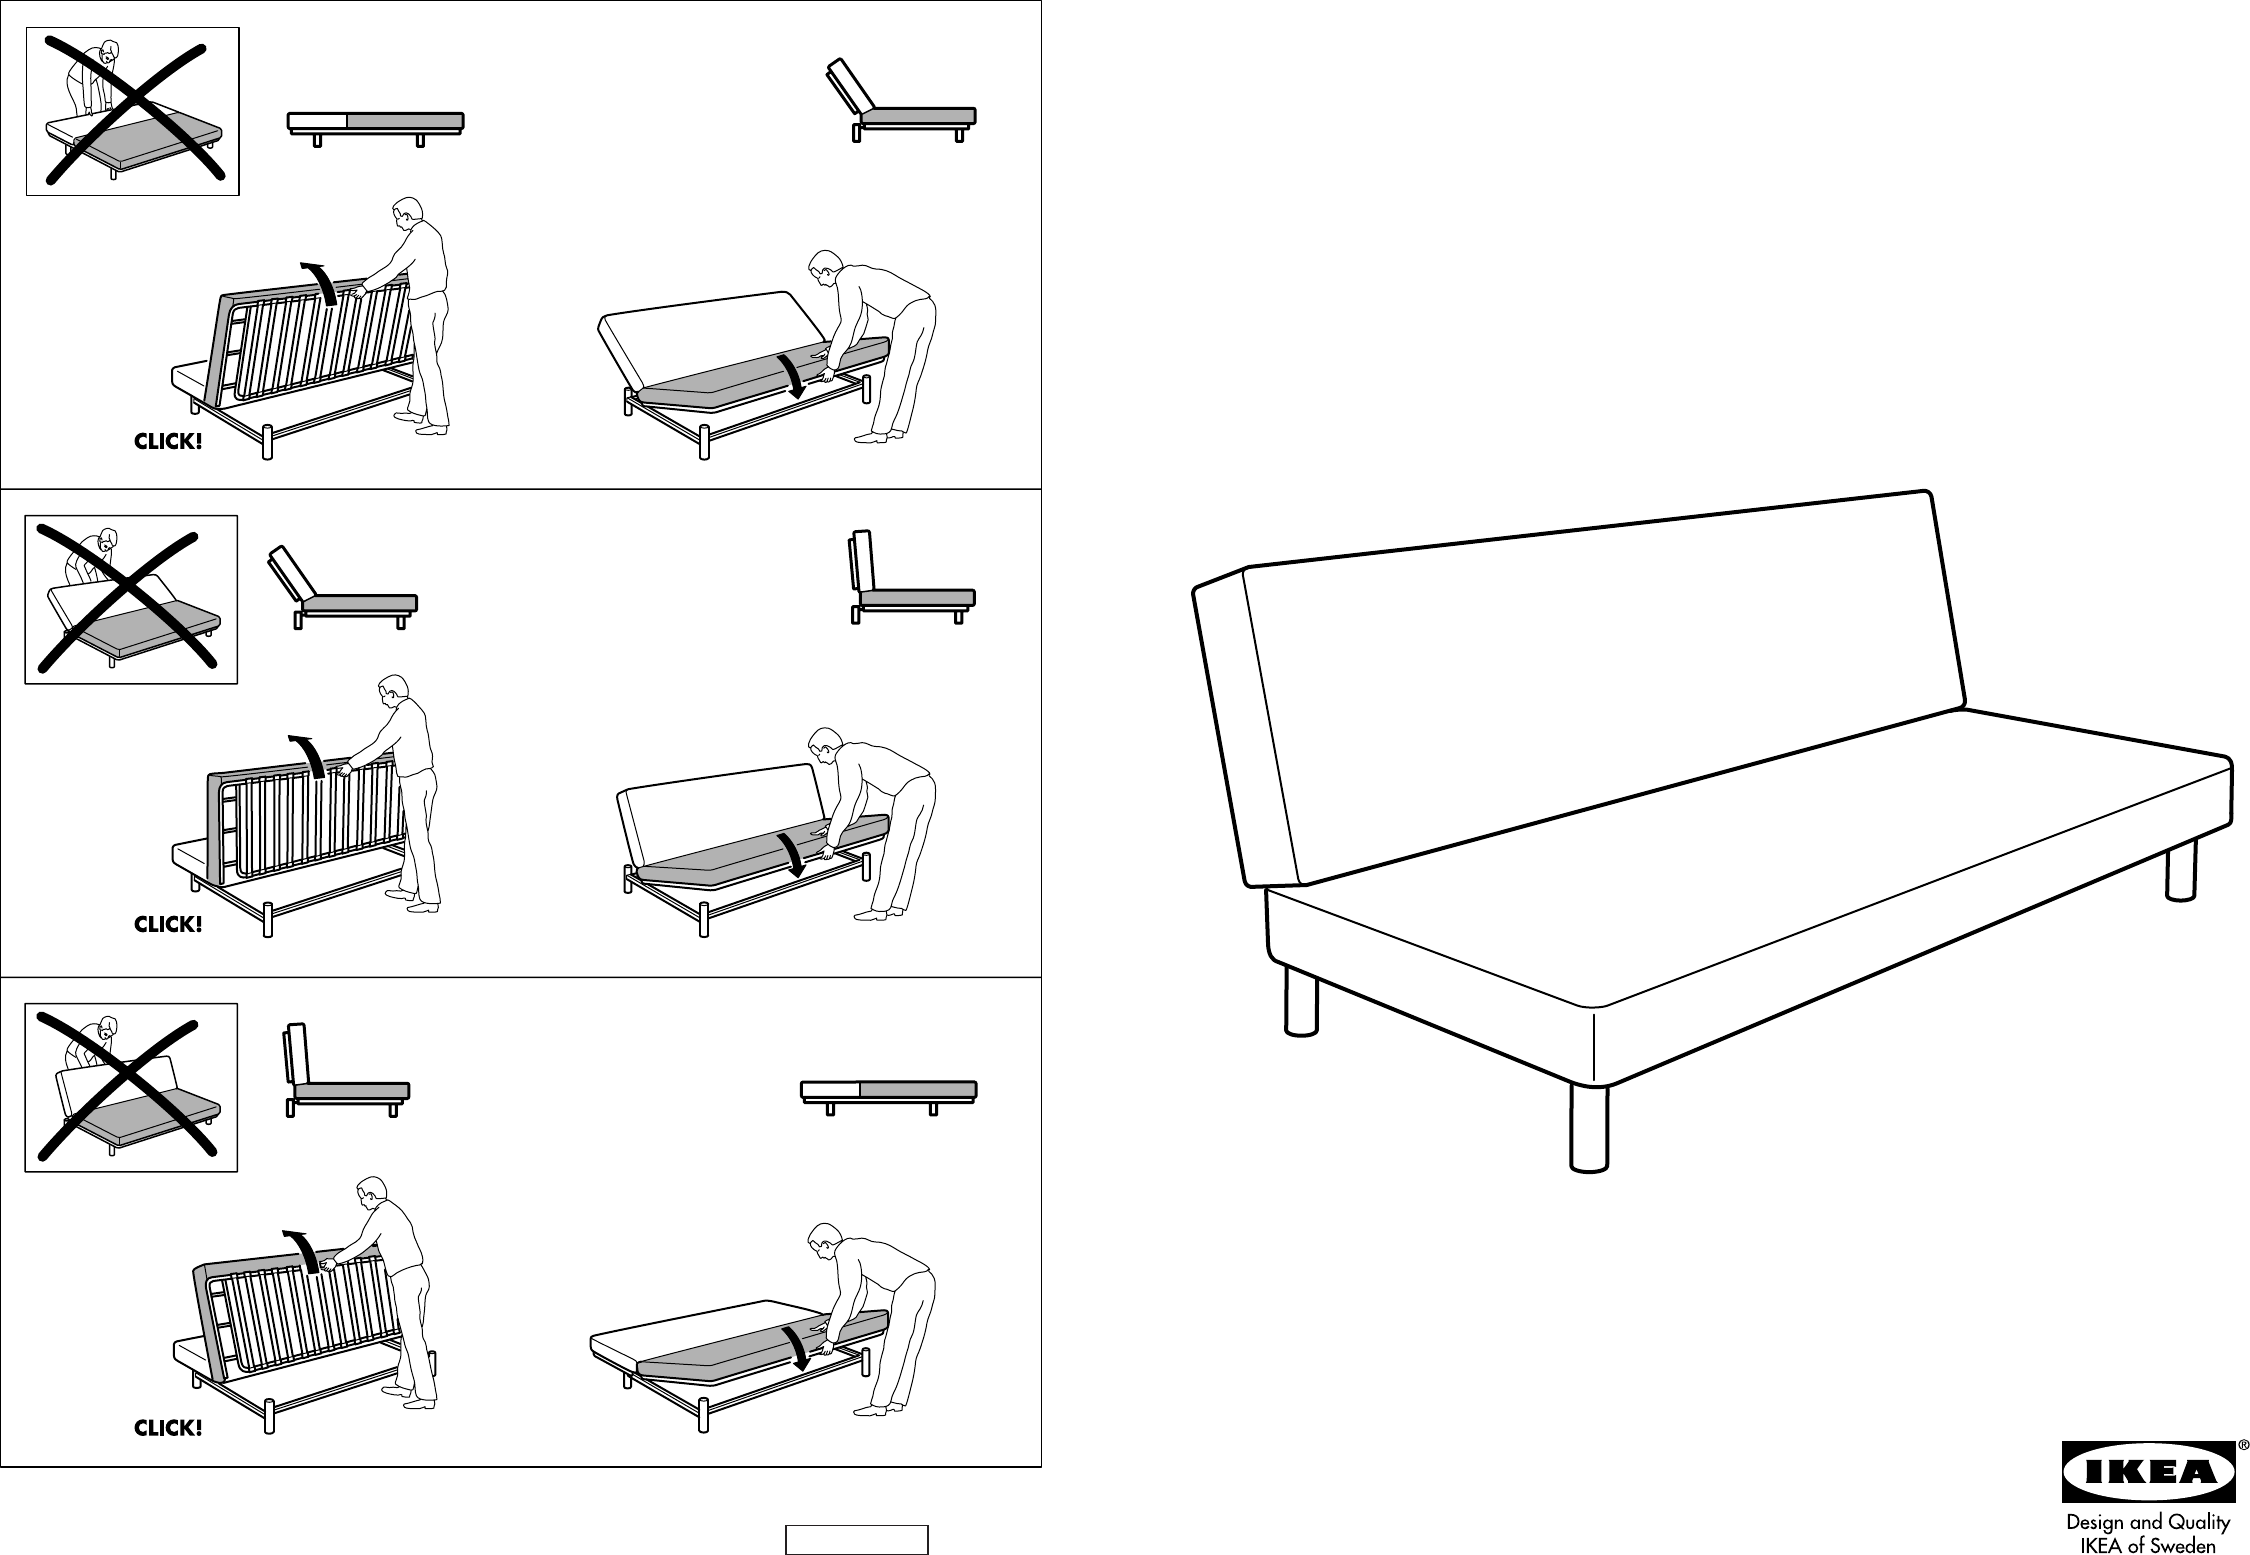 Manual Ikea Beddinge slaapbank 2 of 4) (English, German, Dutch, Danish, French, Italian, Polish, Portuguese, Swedish, Norwegian, Finnish)